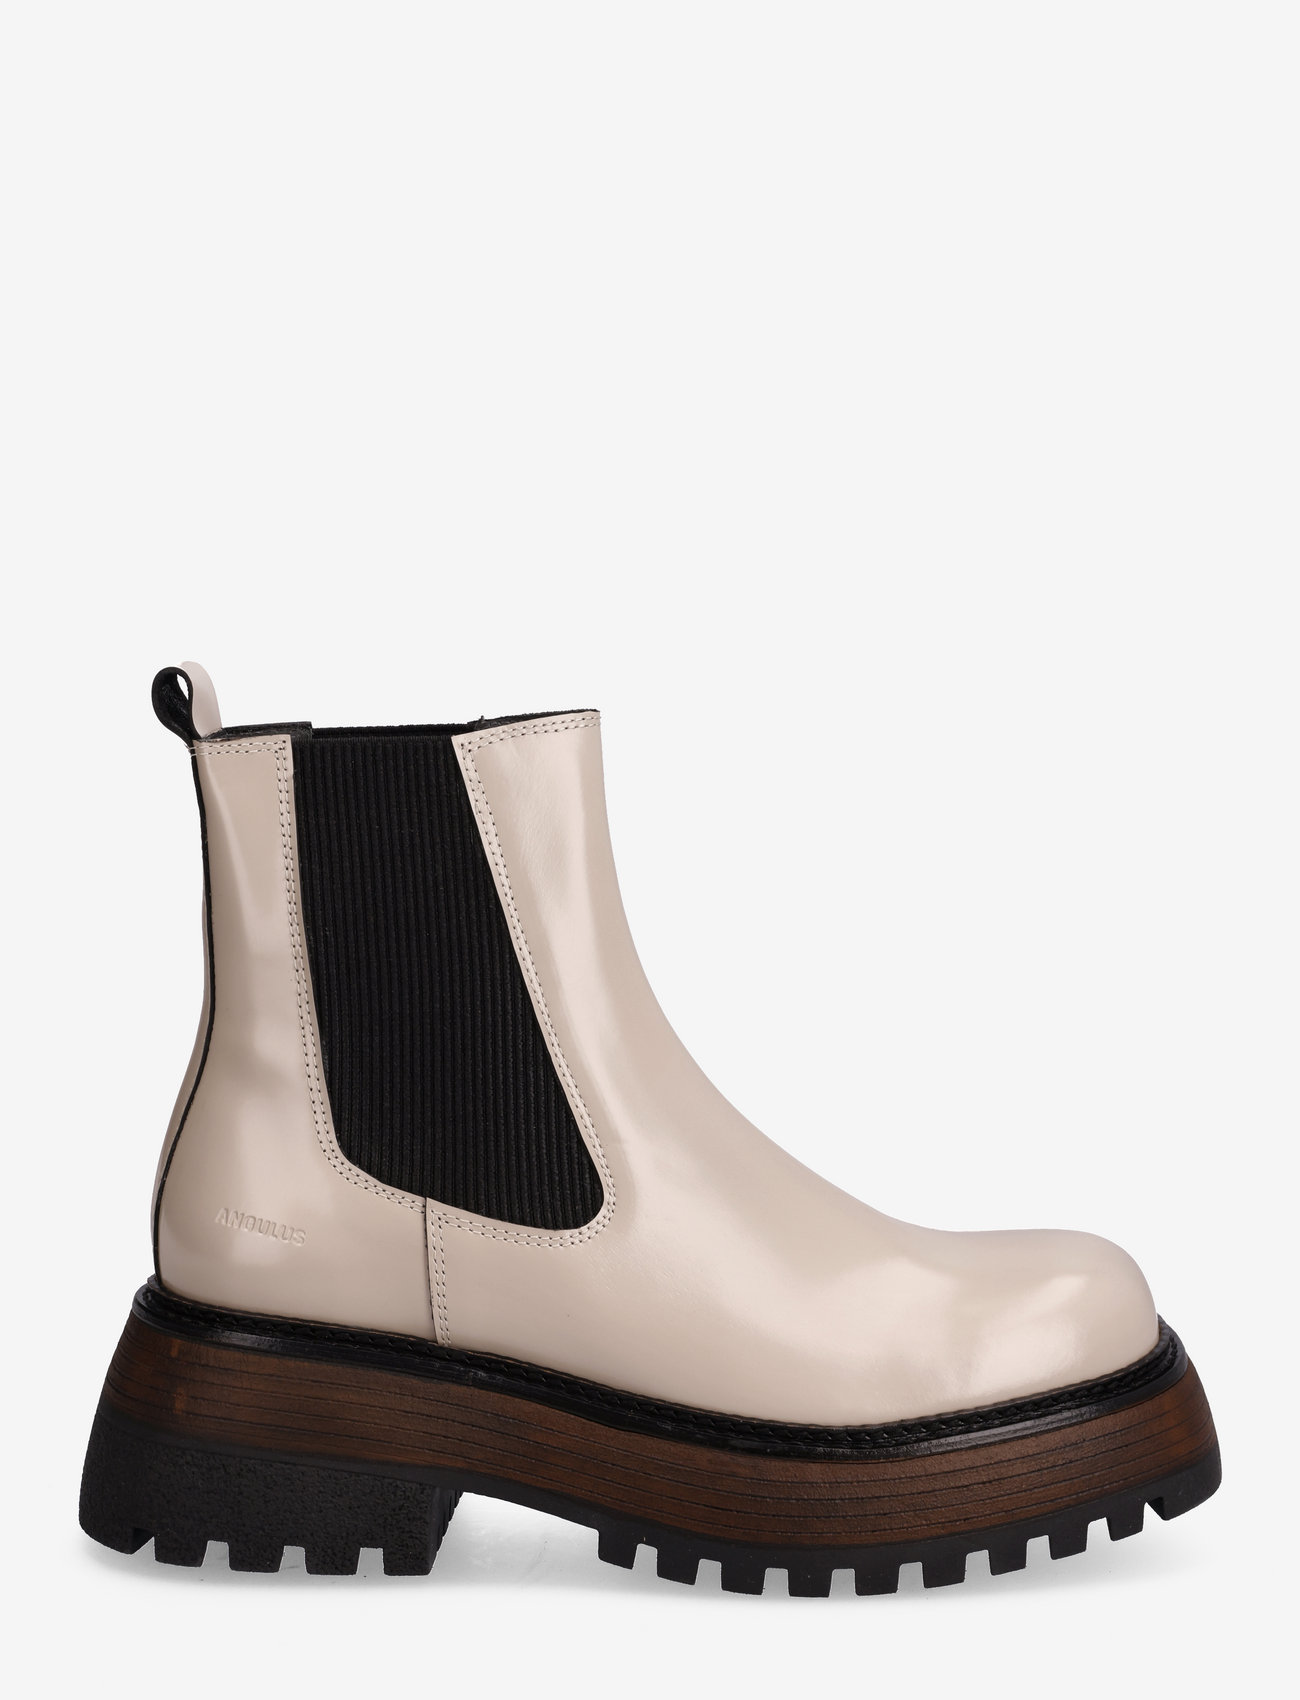 ANGULUS - Boots - flat - chelsea stila zābaki - 1402/019 beige/black - 1